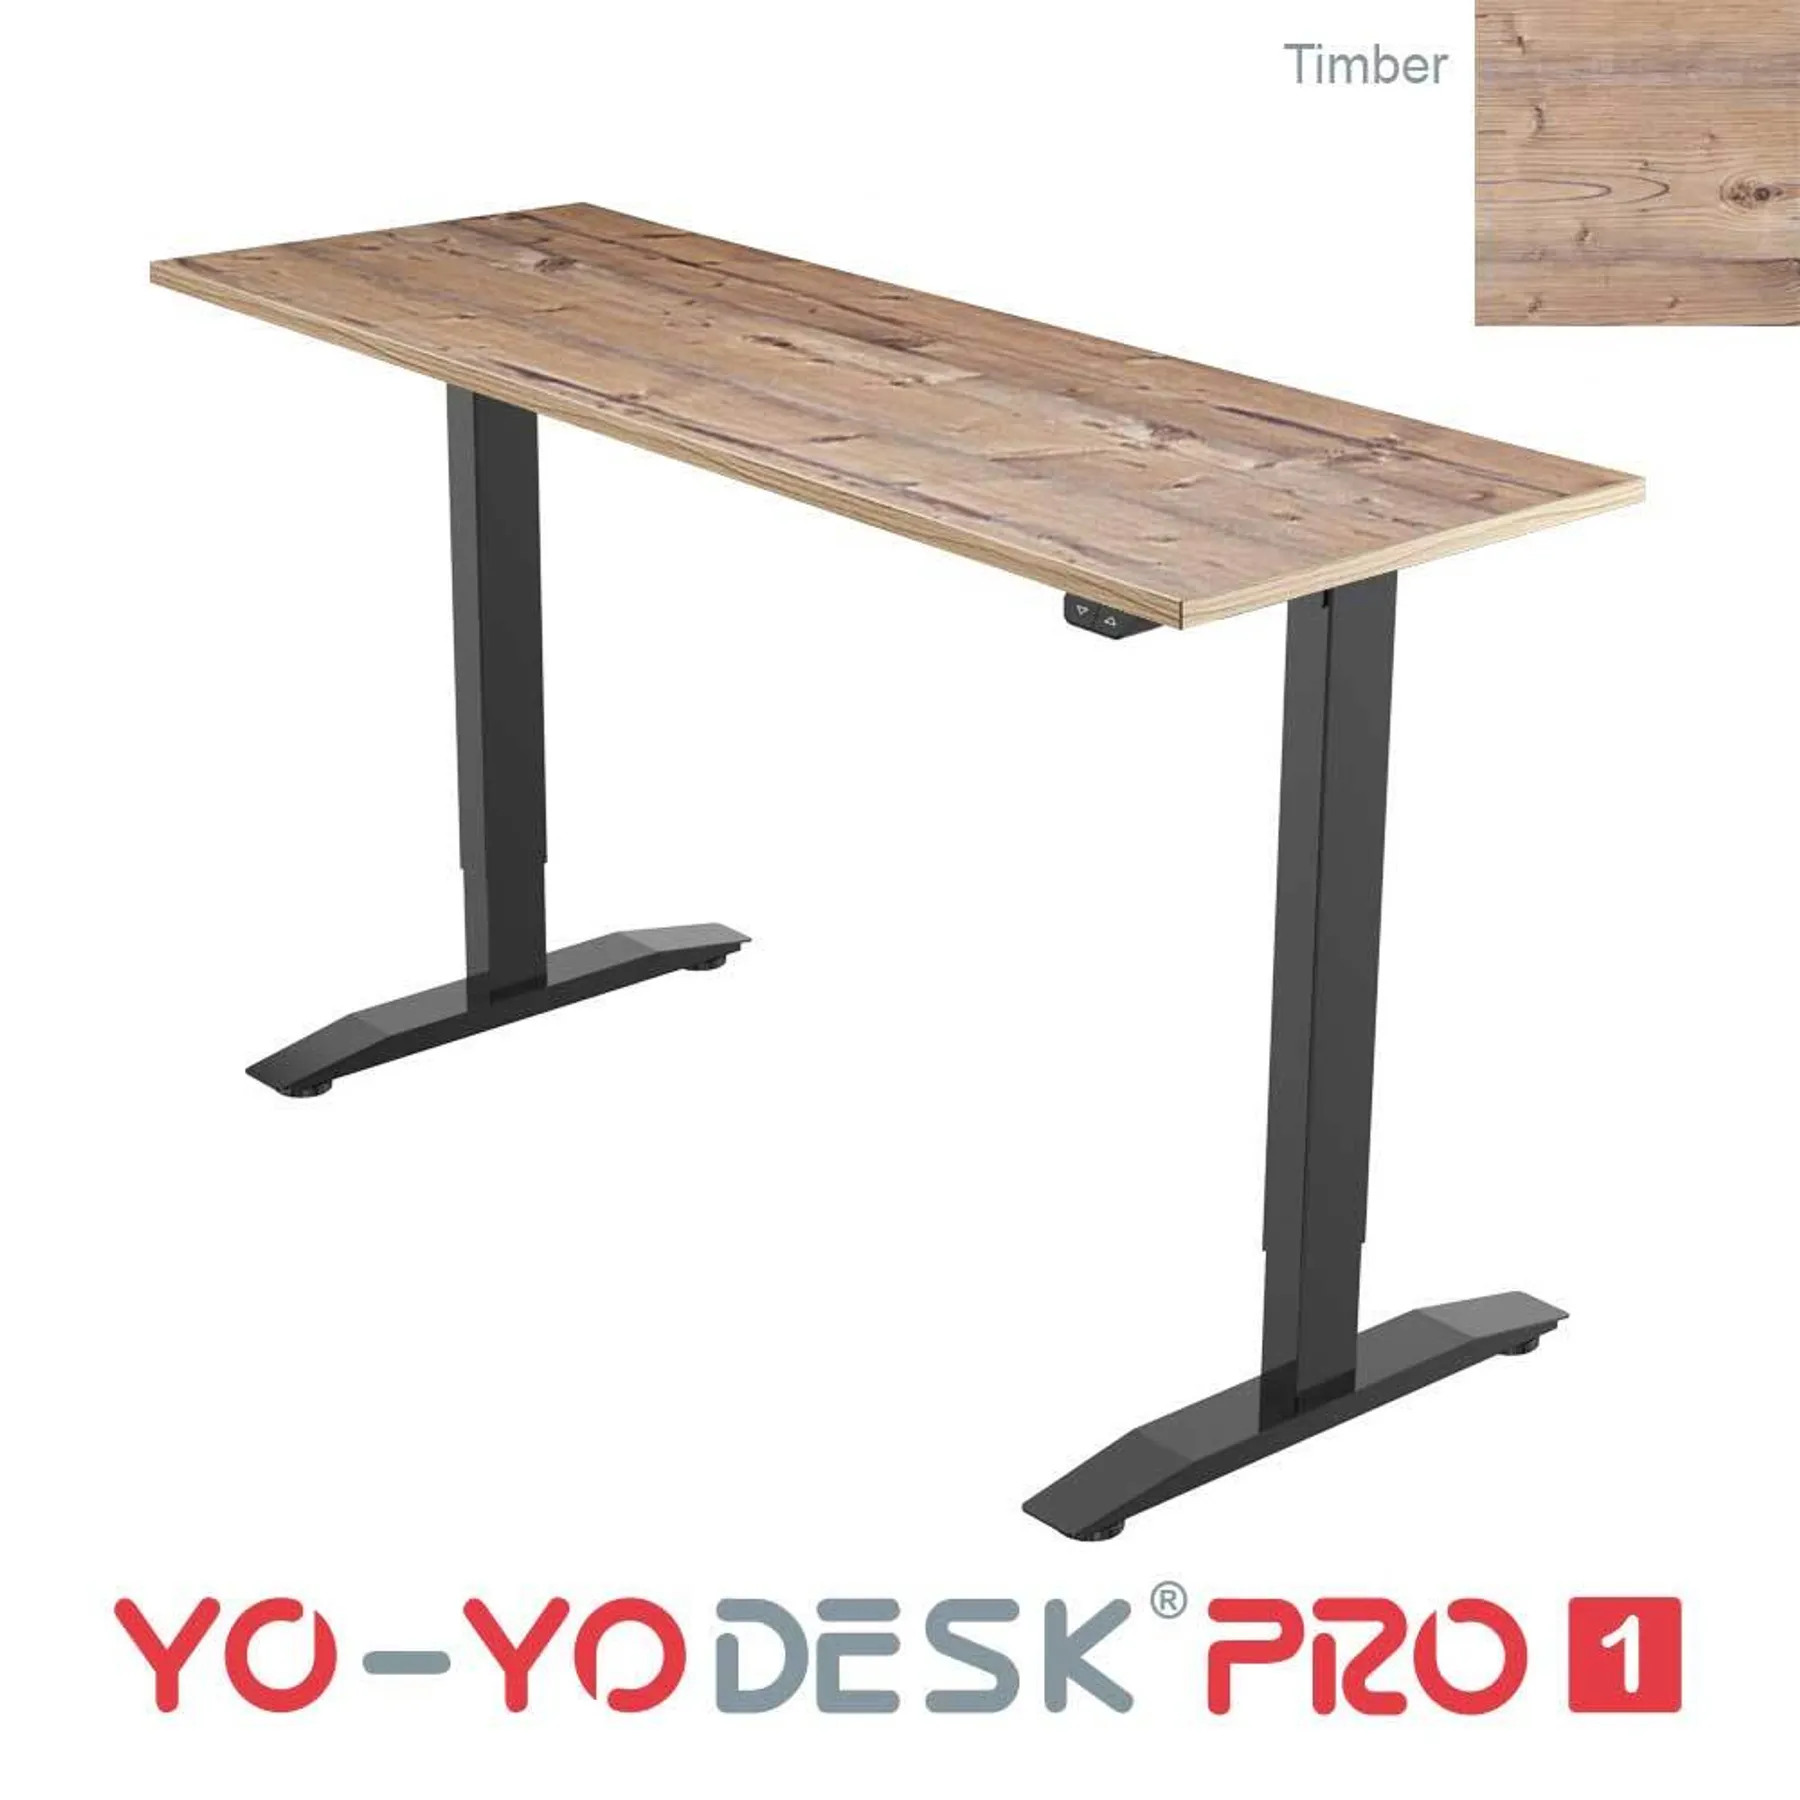 Lof direct yoyo desk pro 1 Black frame Timber top